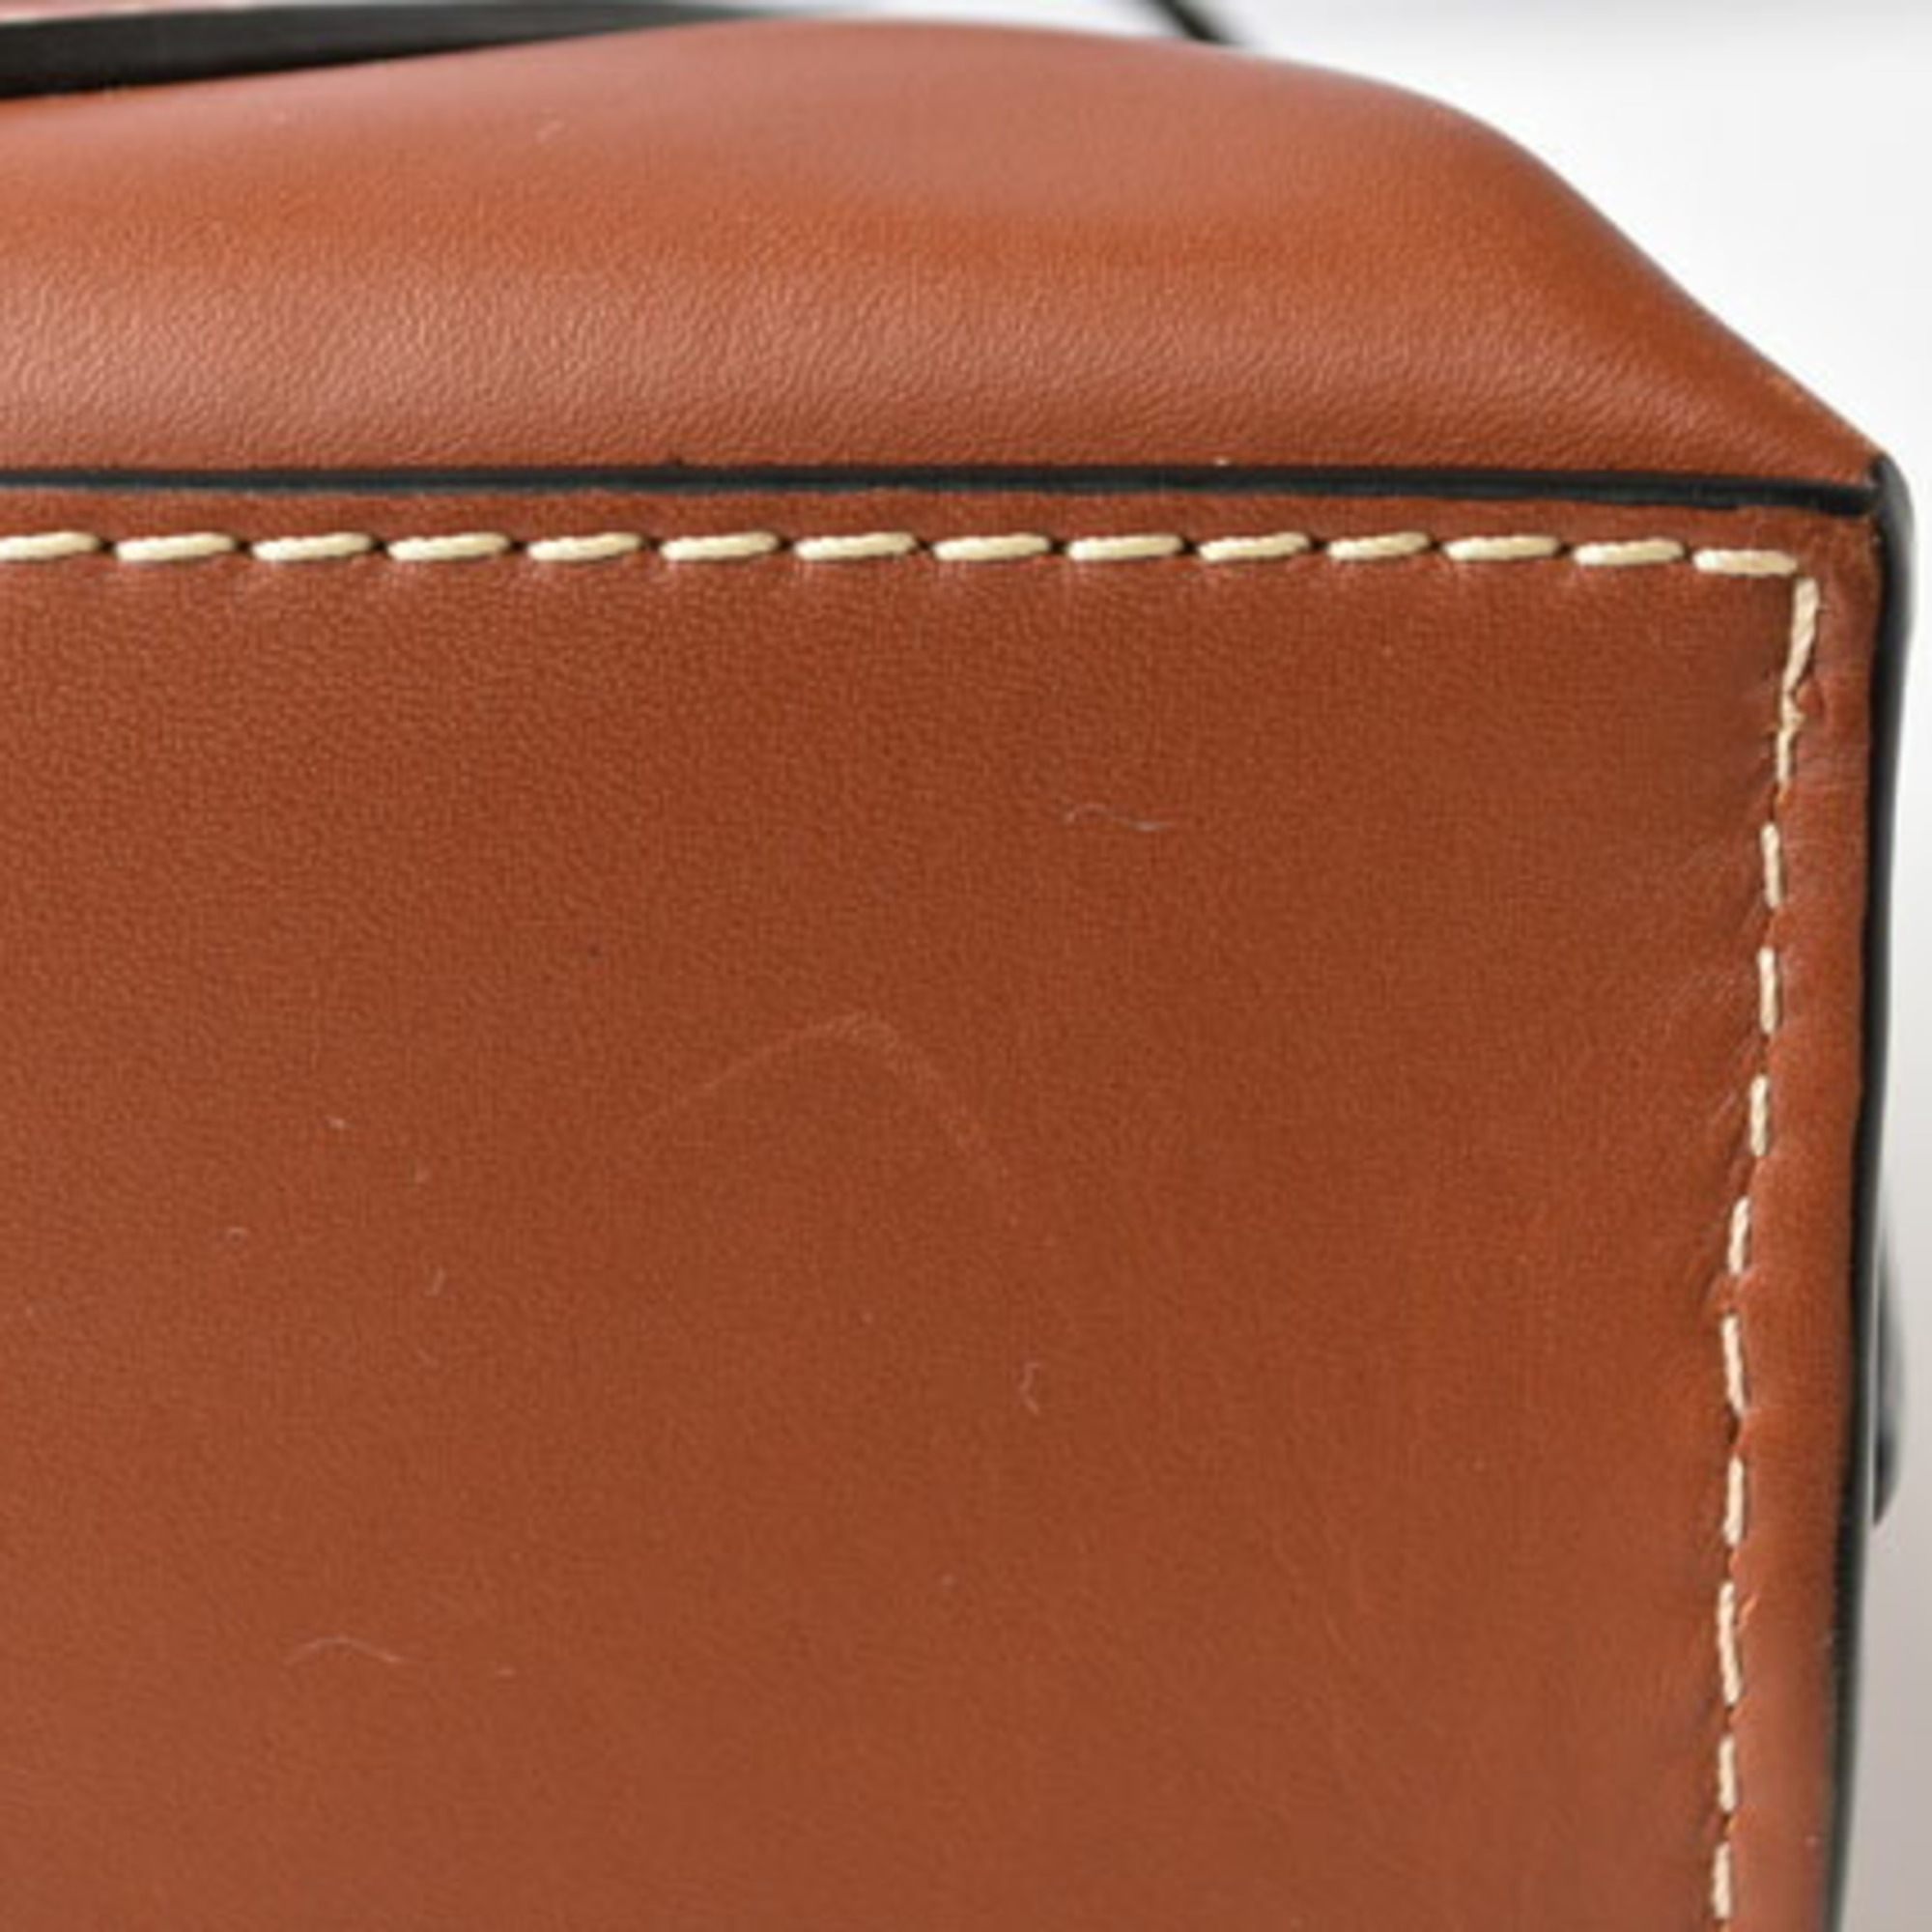 LOEWE Handbag/Gate/Shoulder bag 2way Bag Leather Brown 321.56.Z99